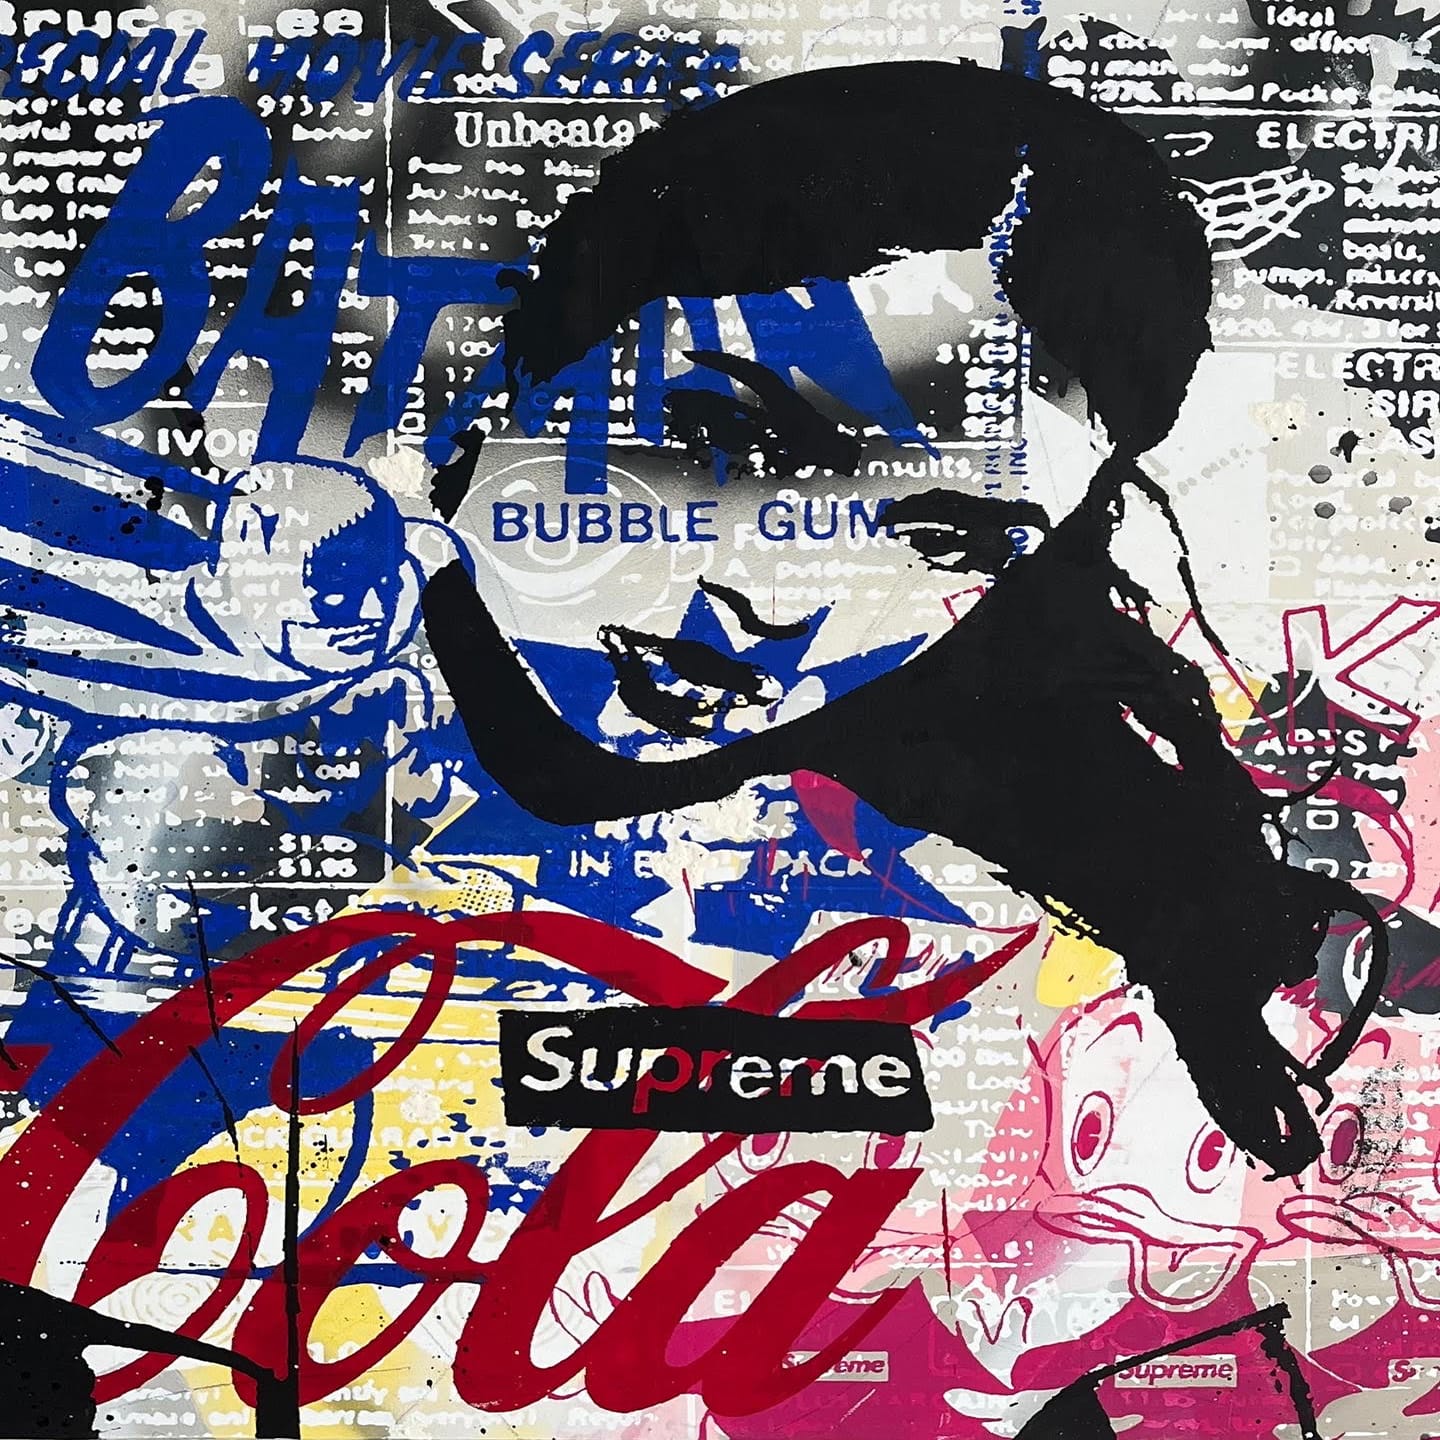 marly mcfly, bubble gum, silk screen, pop art, street art, text, cola, batman